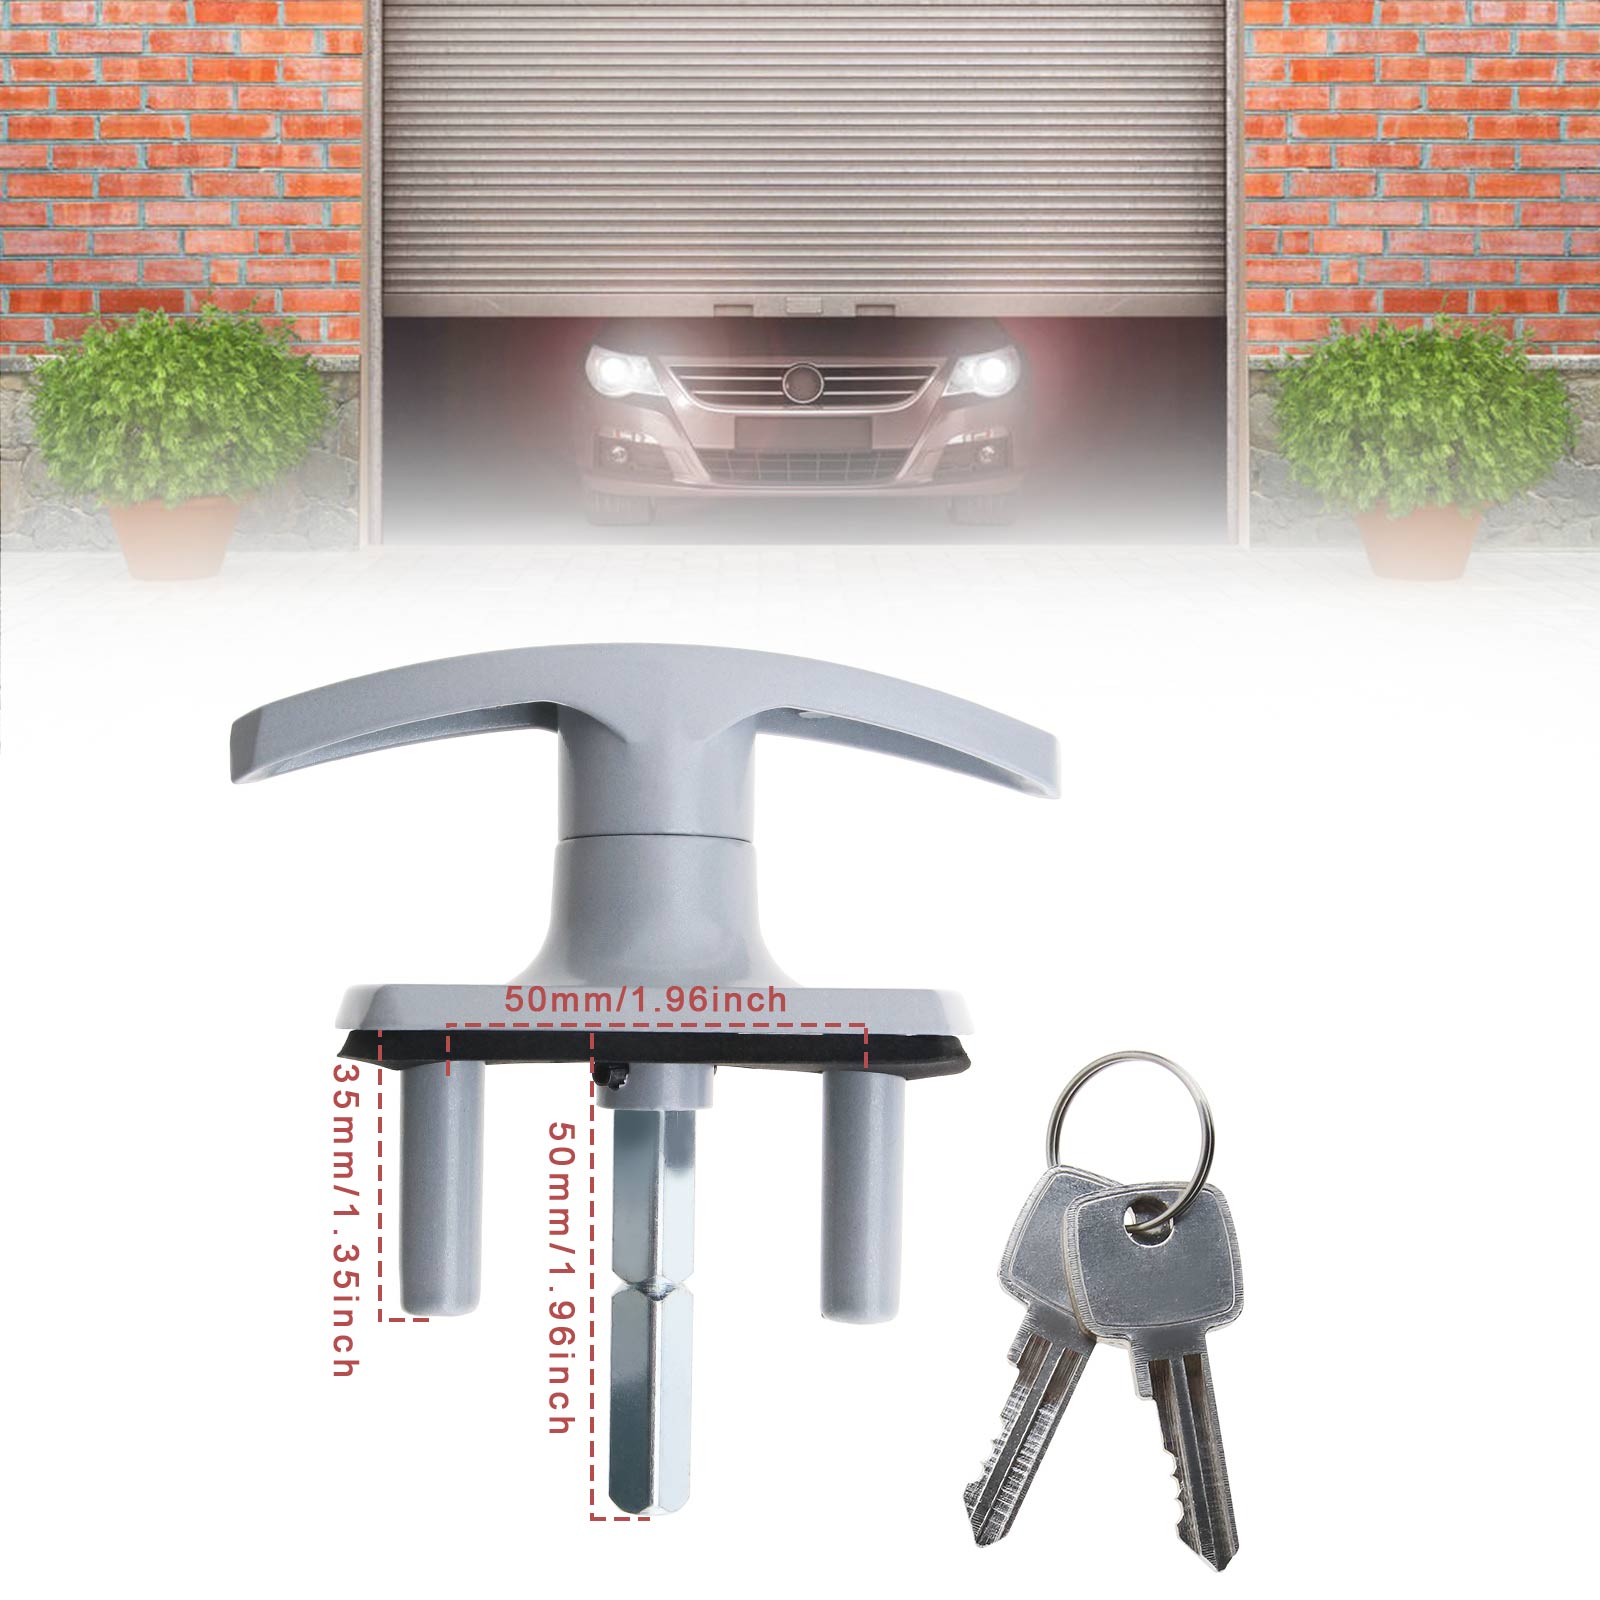 Minimalist Garage Door Handle Repair Kit for Living room